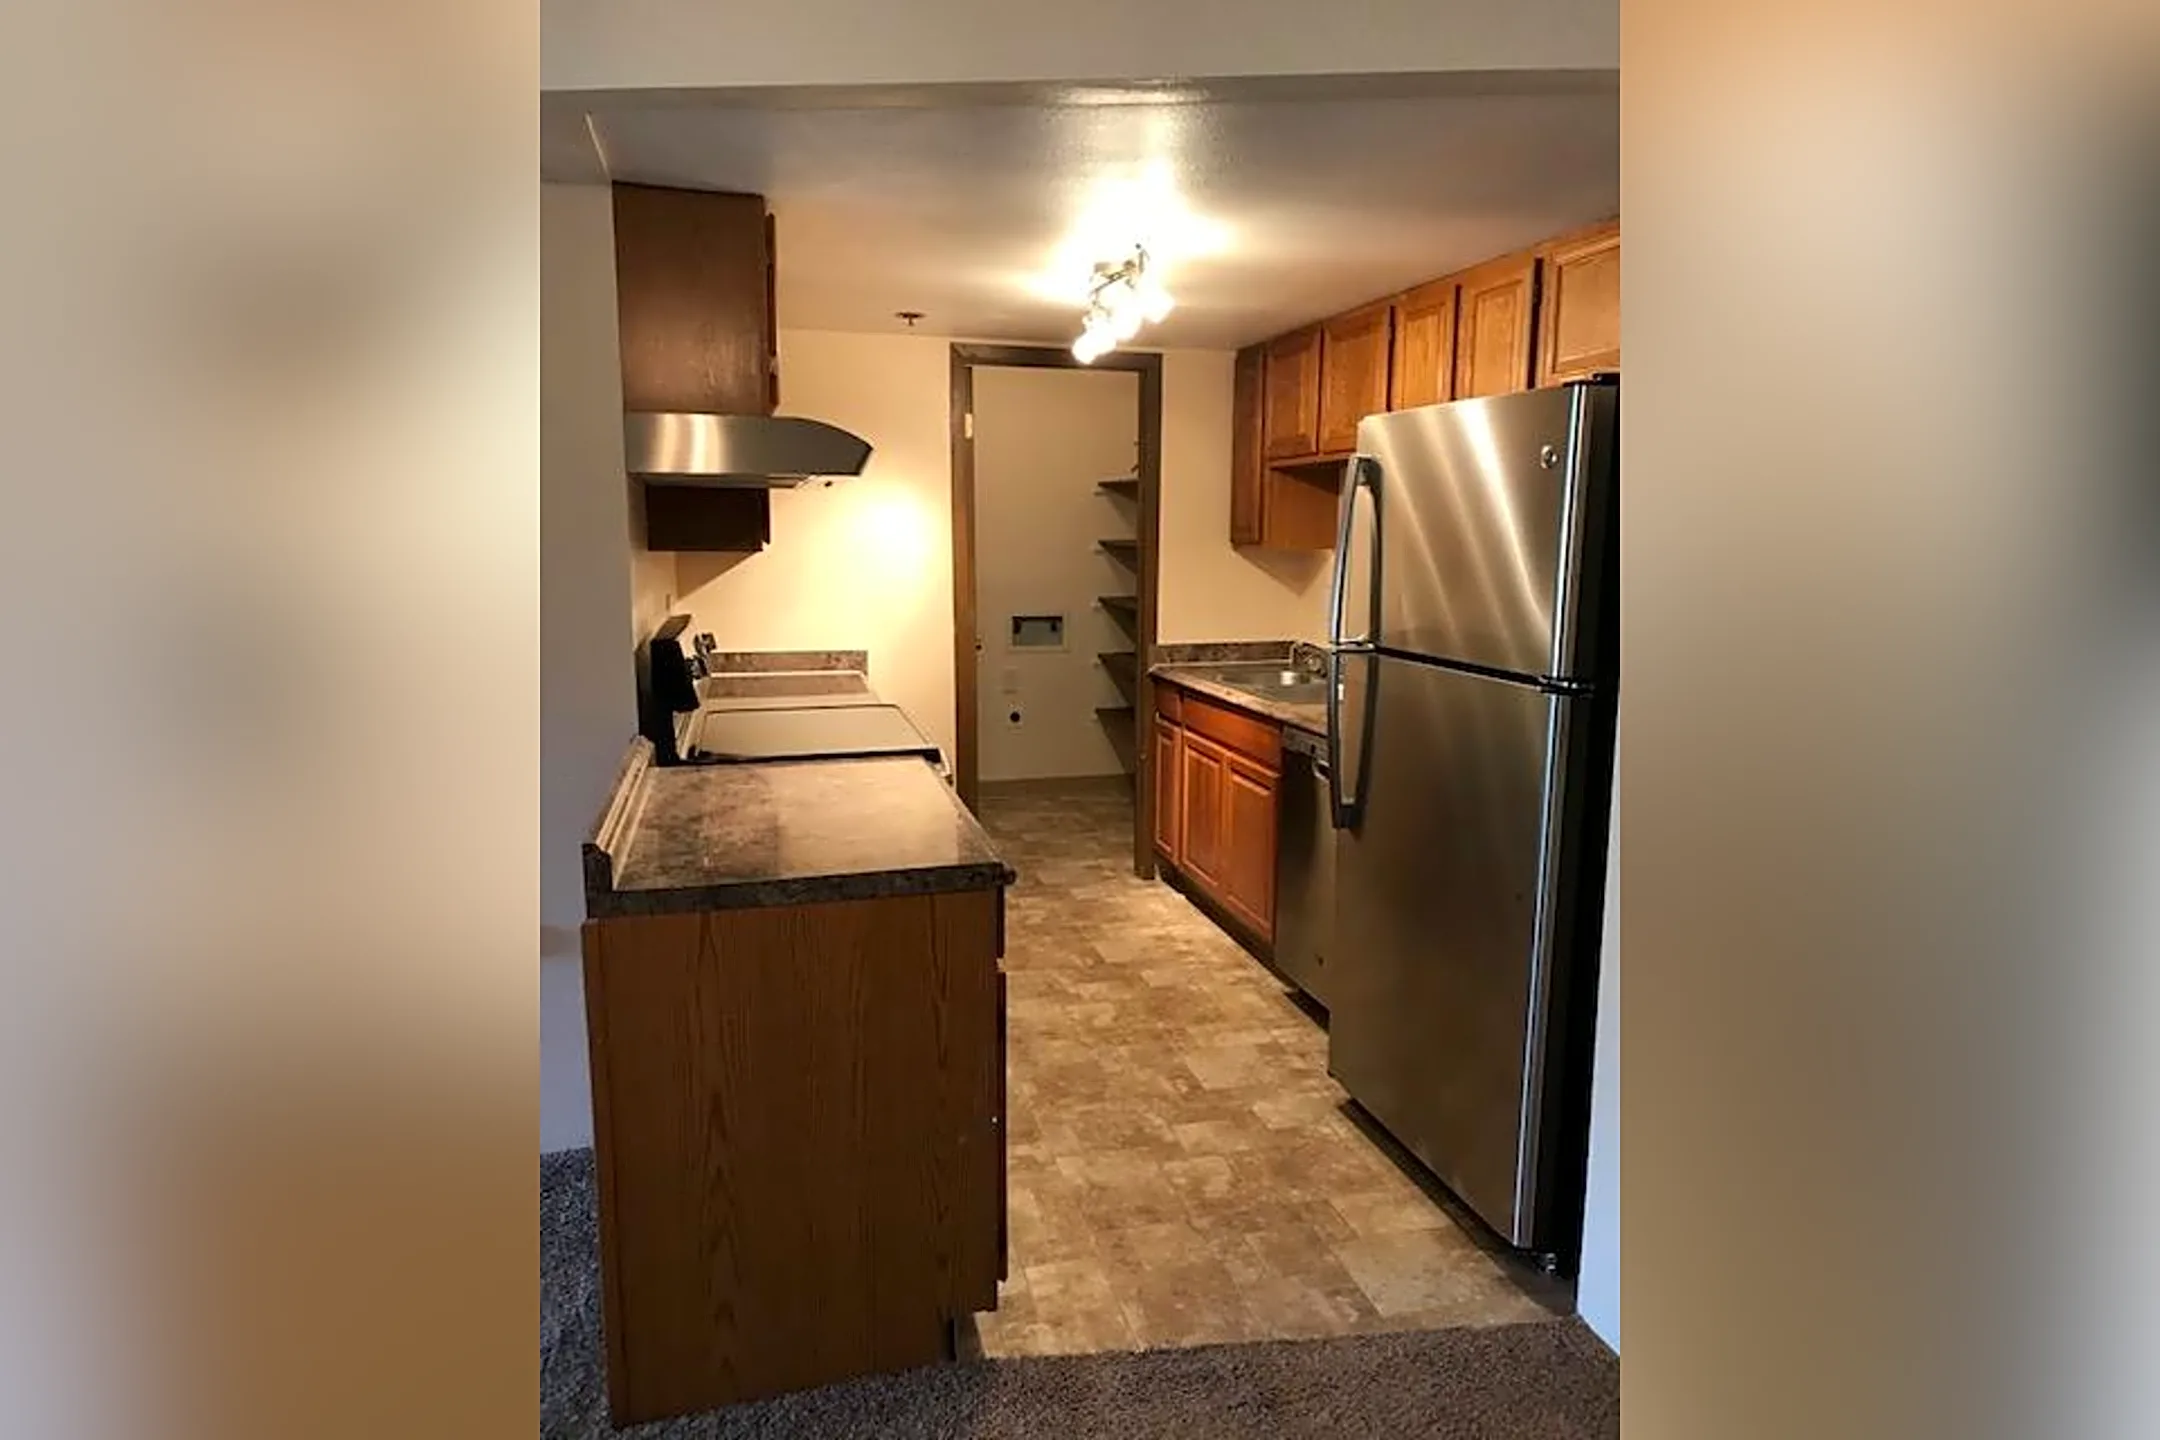 Kitchen - Central Park Apartments - Anchorage, AK